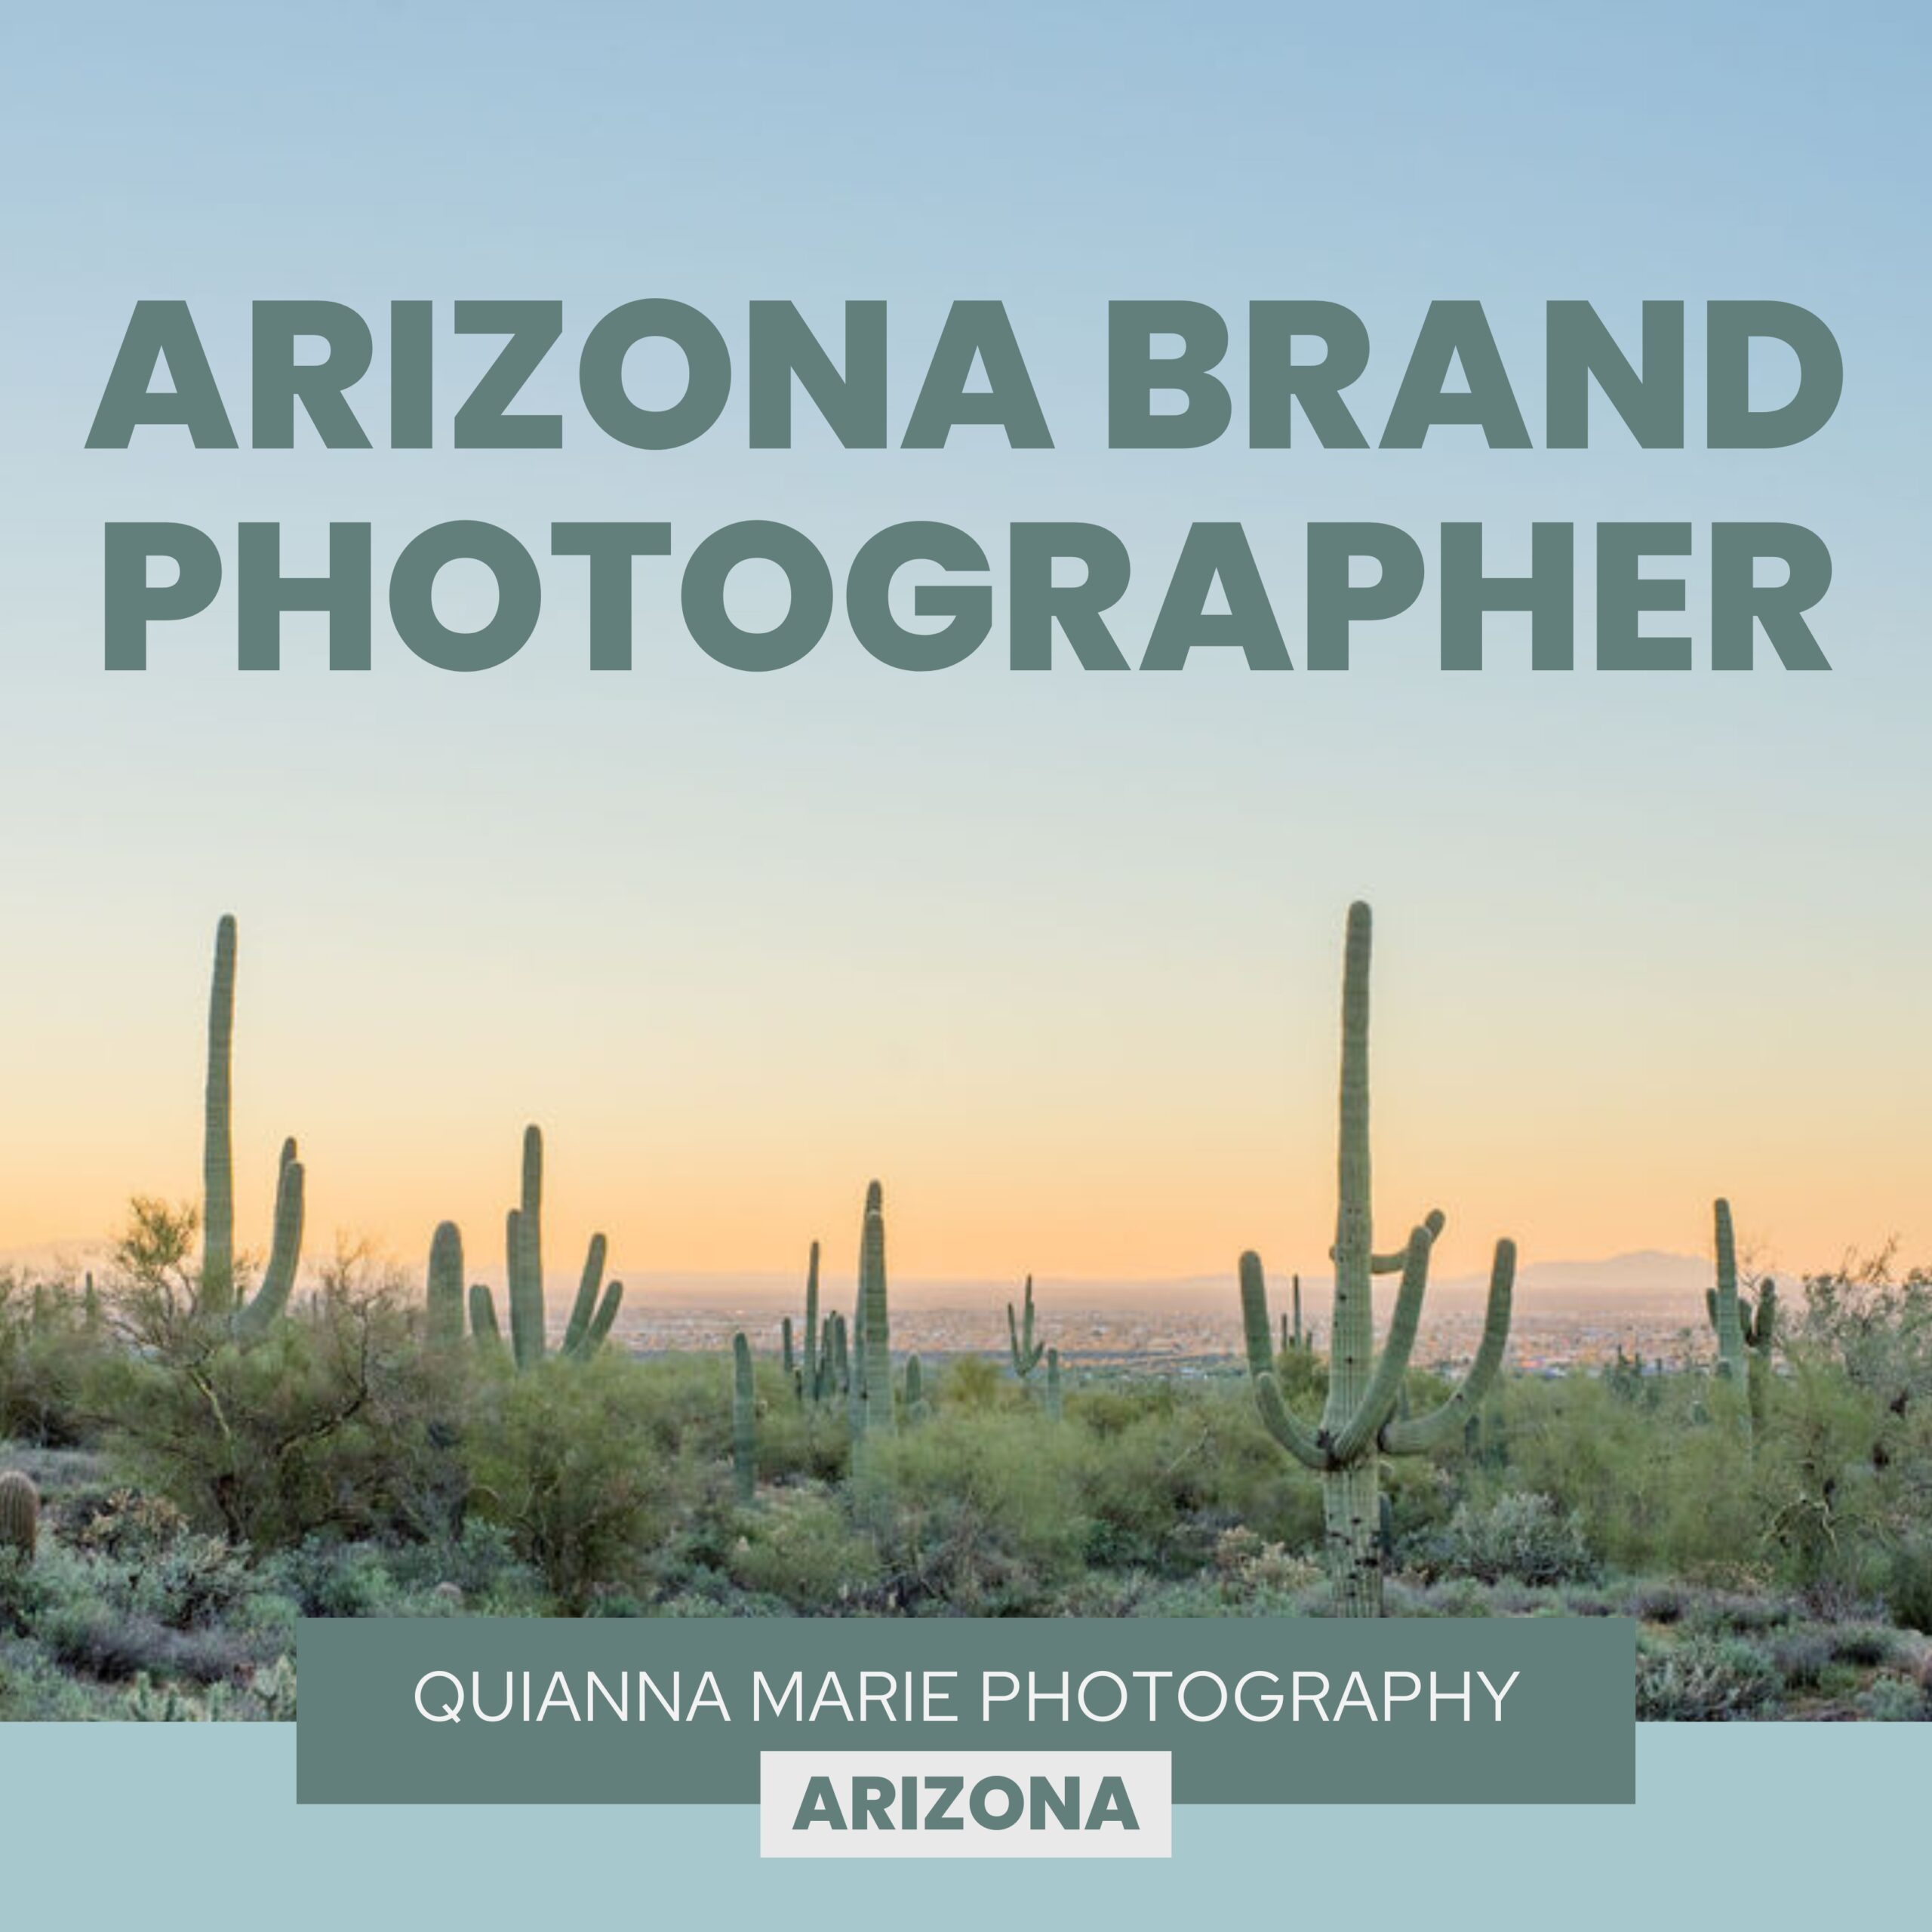 Arizona Brand Photographer Quianna Marie